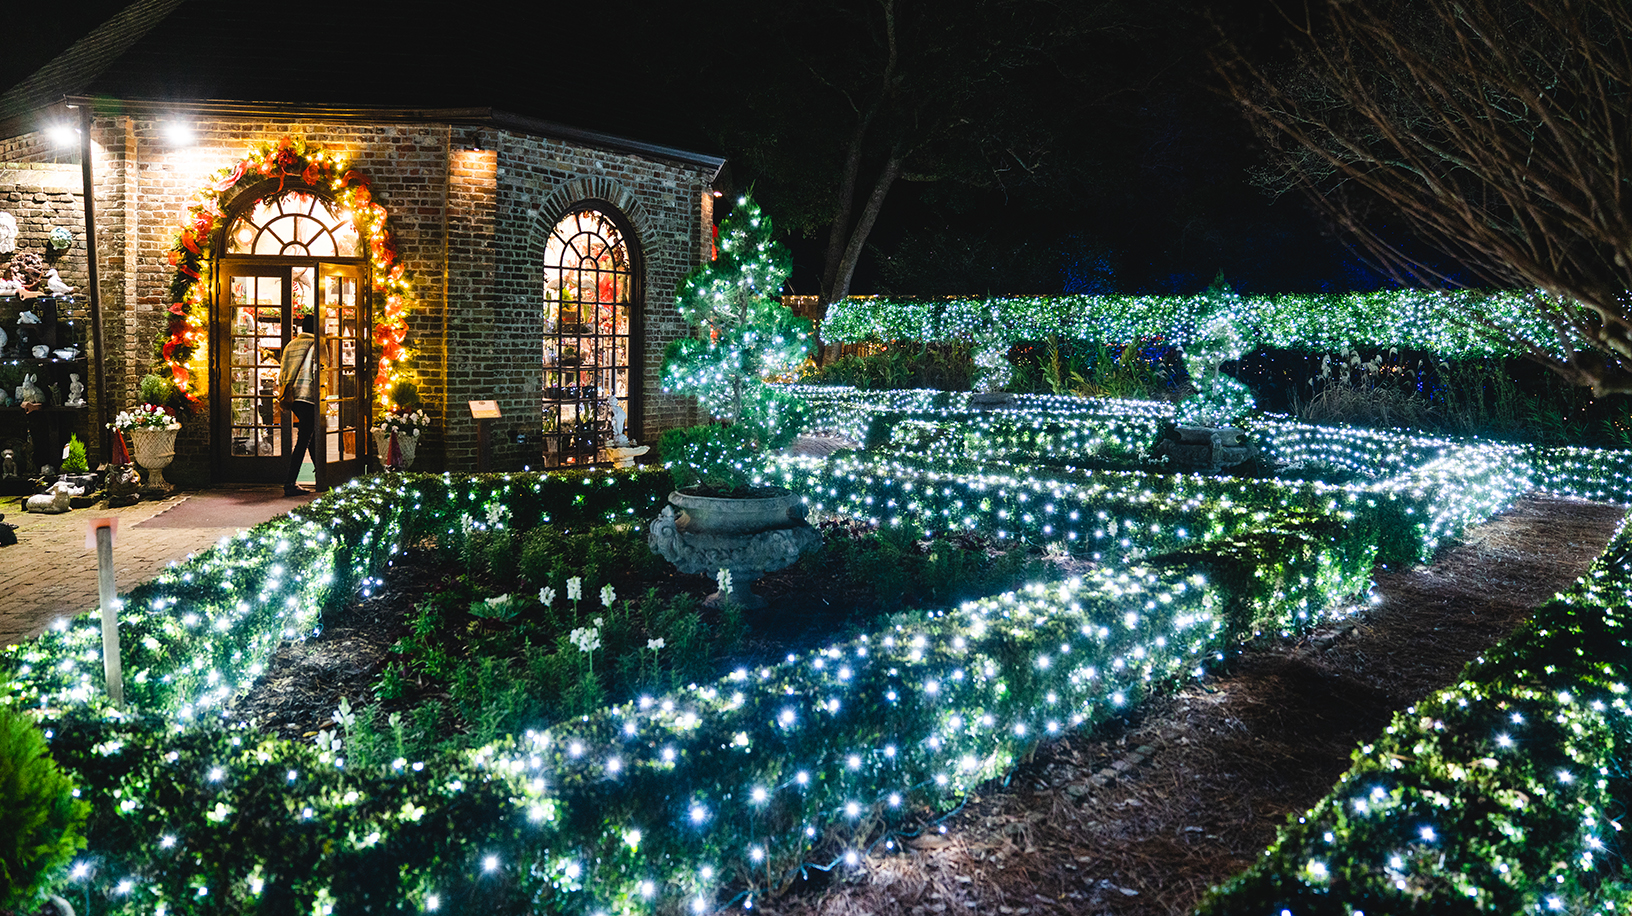 Winterlights at The Elizabethan Gardens